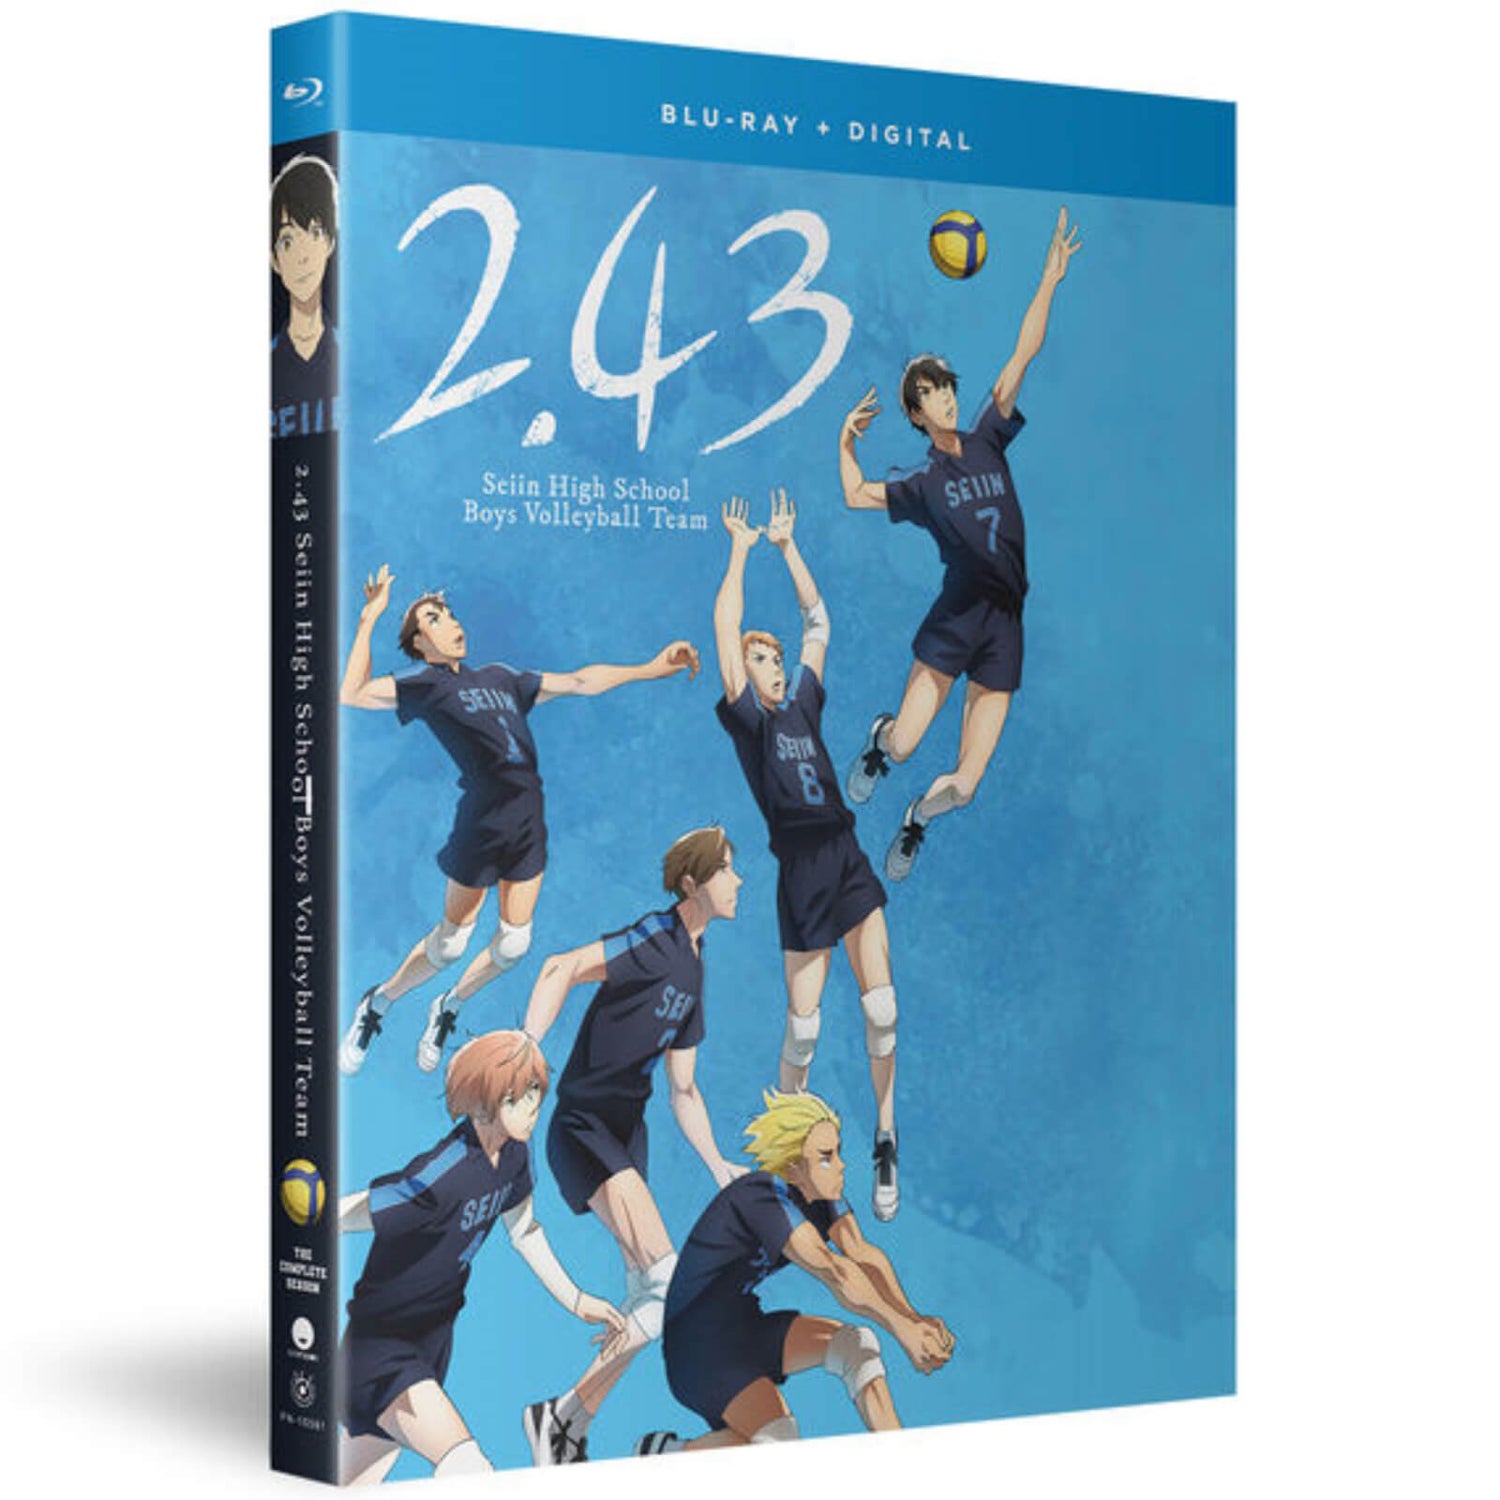 2.43: Seiin High School Boys Volleyball Team - The Complete Season